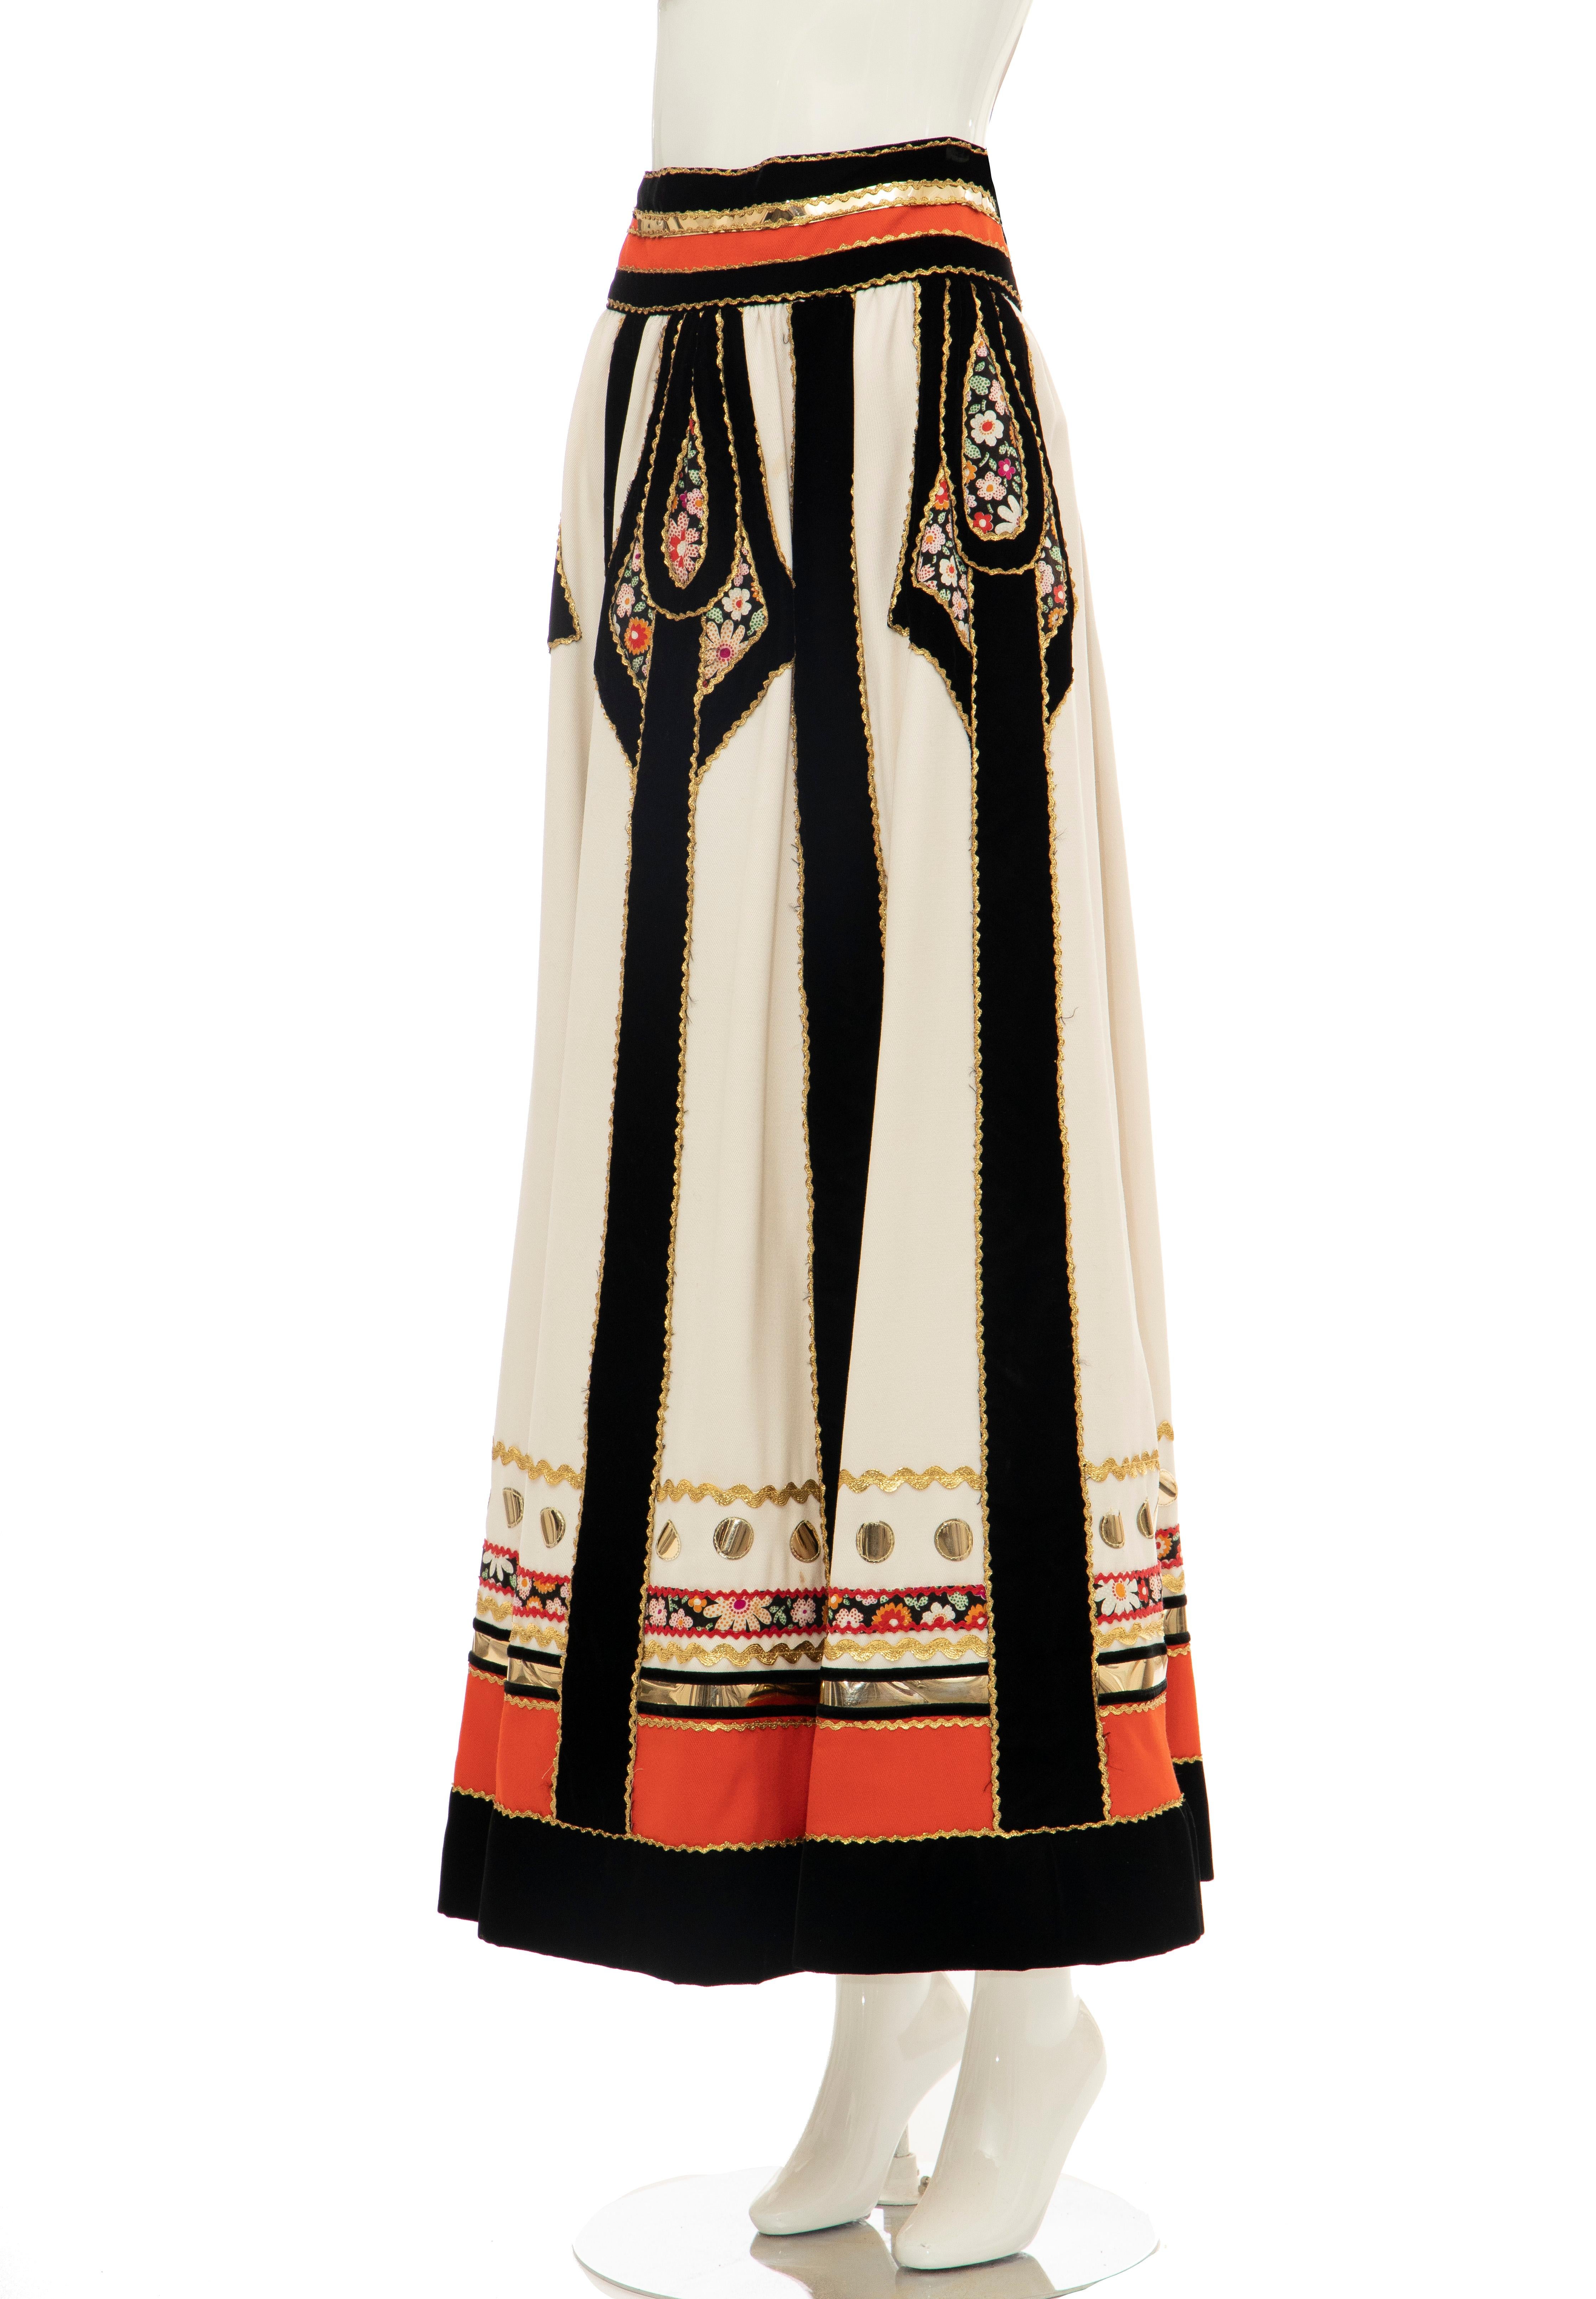 Women's Youssef Rizkallah for Malcolm Starr Caspian Sea Collection Skirt, Circa: 1971